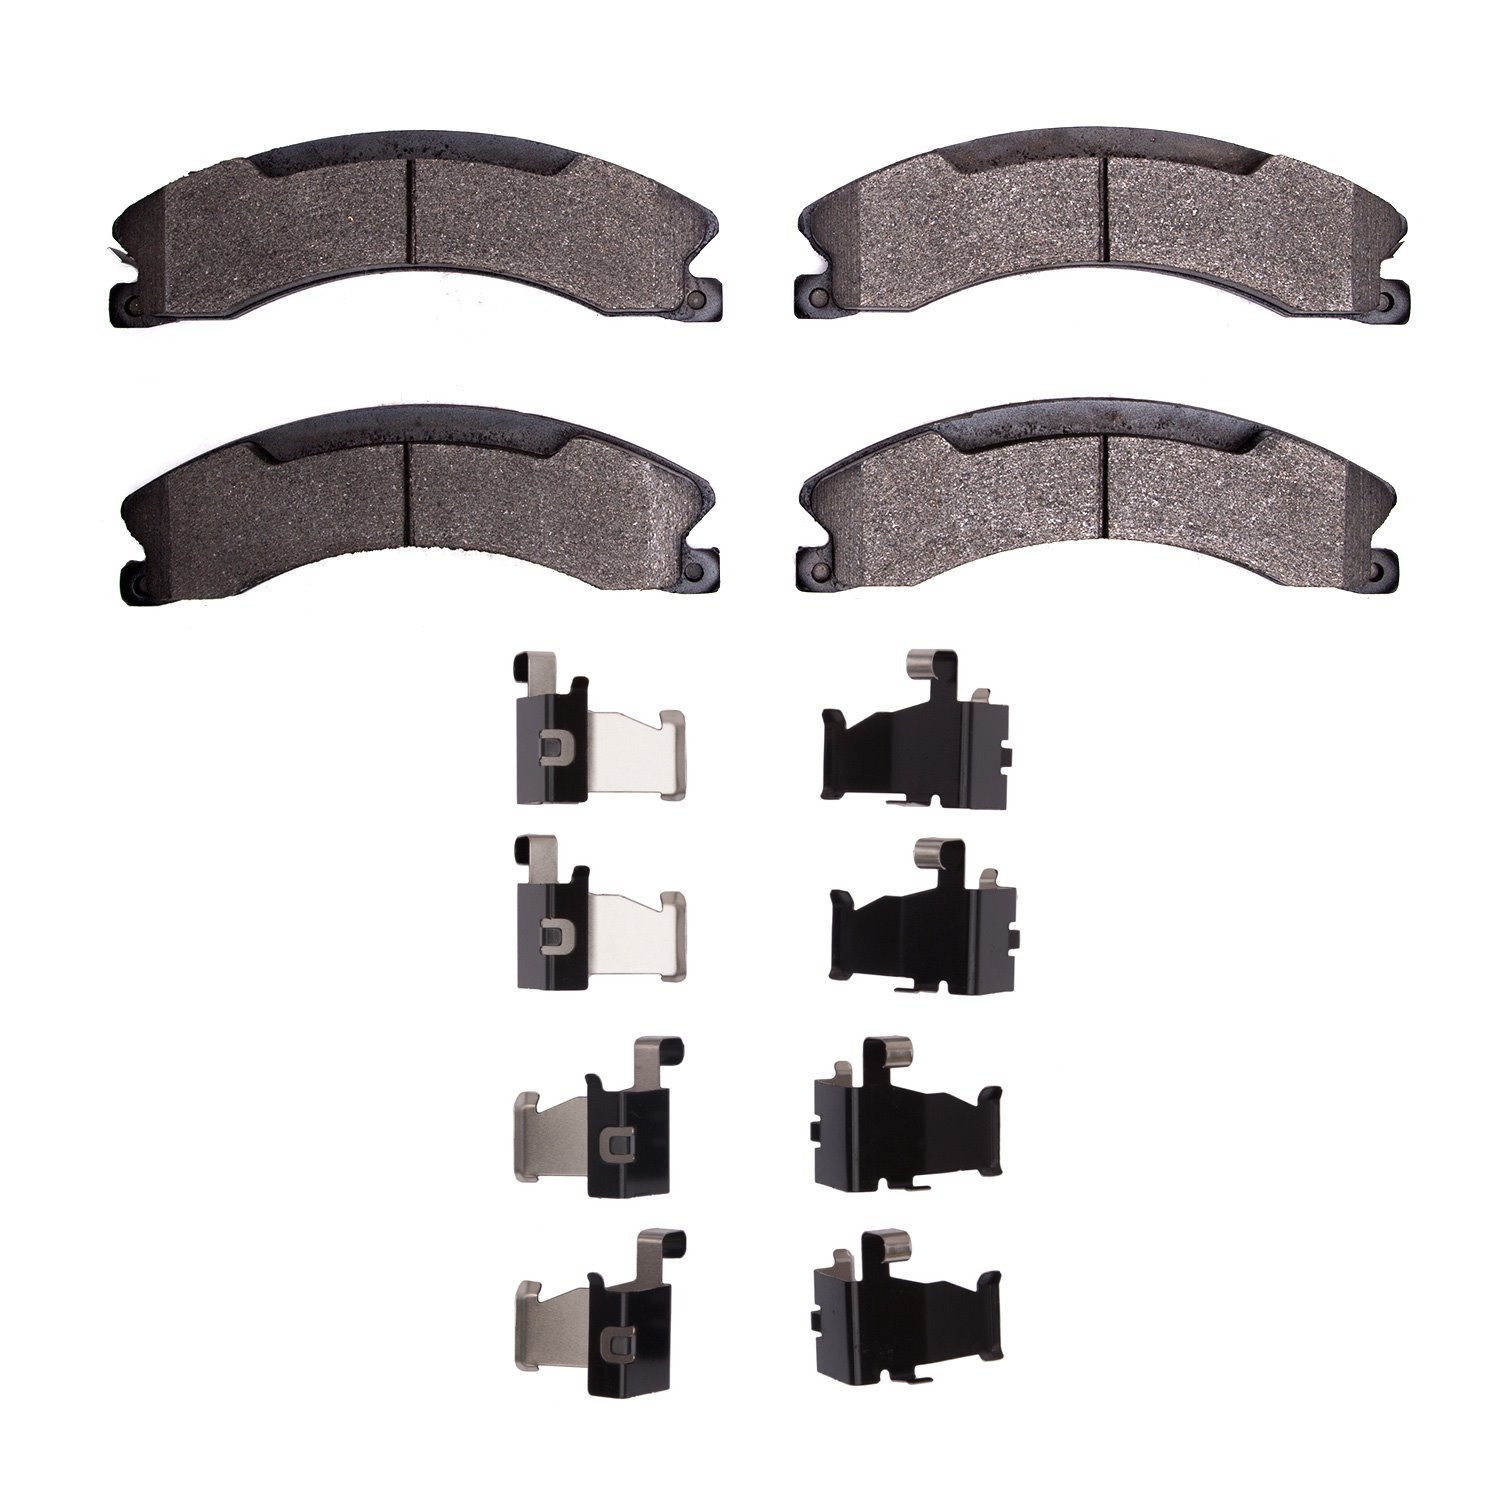 Semi-Metallic Brake Pads & Hardware Kit, Fits Select Fits Multiple Makes/Models, Position: Front & Rear